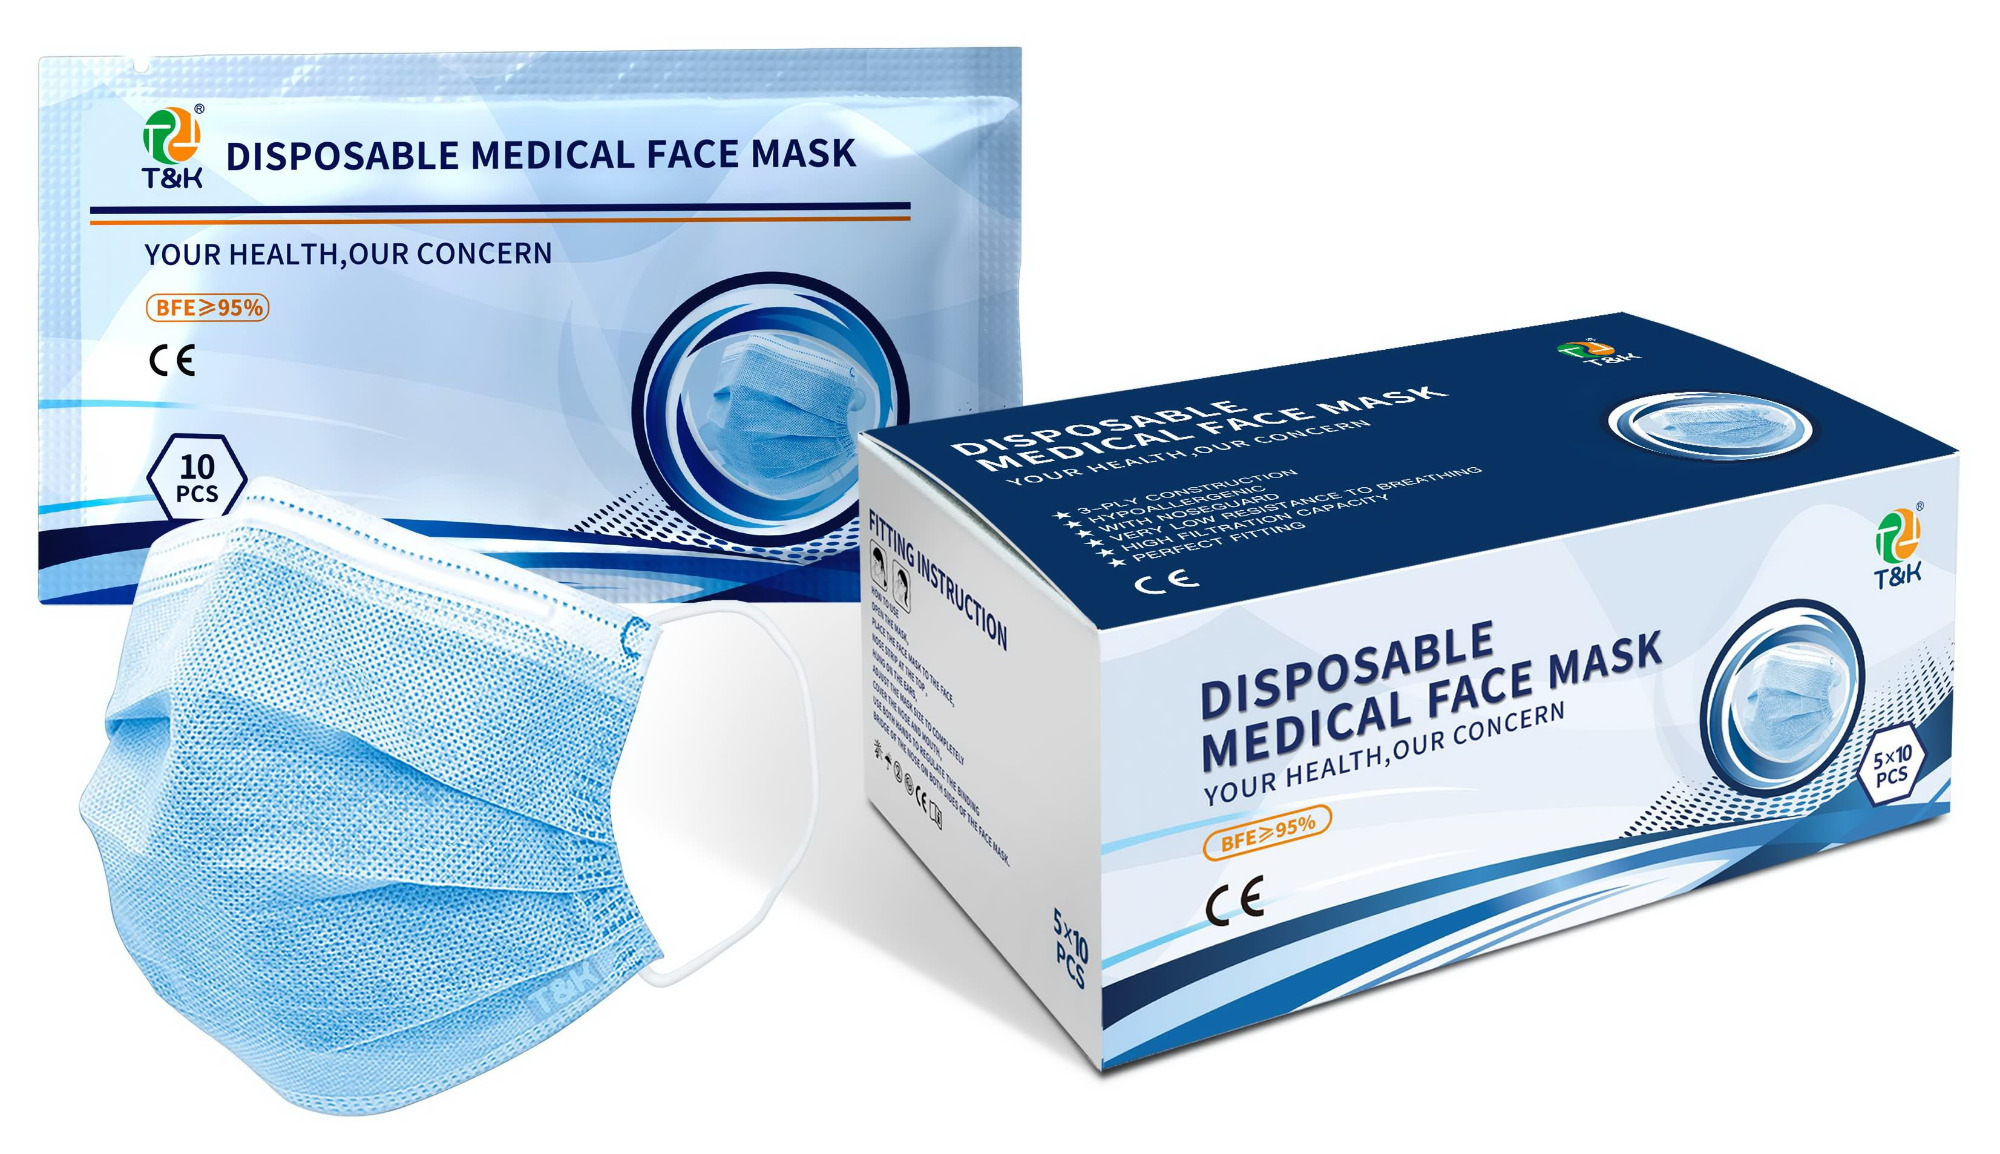 Gauze Mask က တစ်ခါသုံးလို့ရတယ်။ ဘယ်ဟာပိုကောင်းလဲ၊ gauze mask သို့မဟုတ် တစ်ခါသုံးမျက်နှာဖုံး - နာမည်ကြီး I mask စျေးနှုန်း